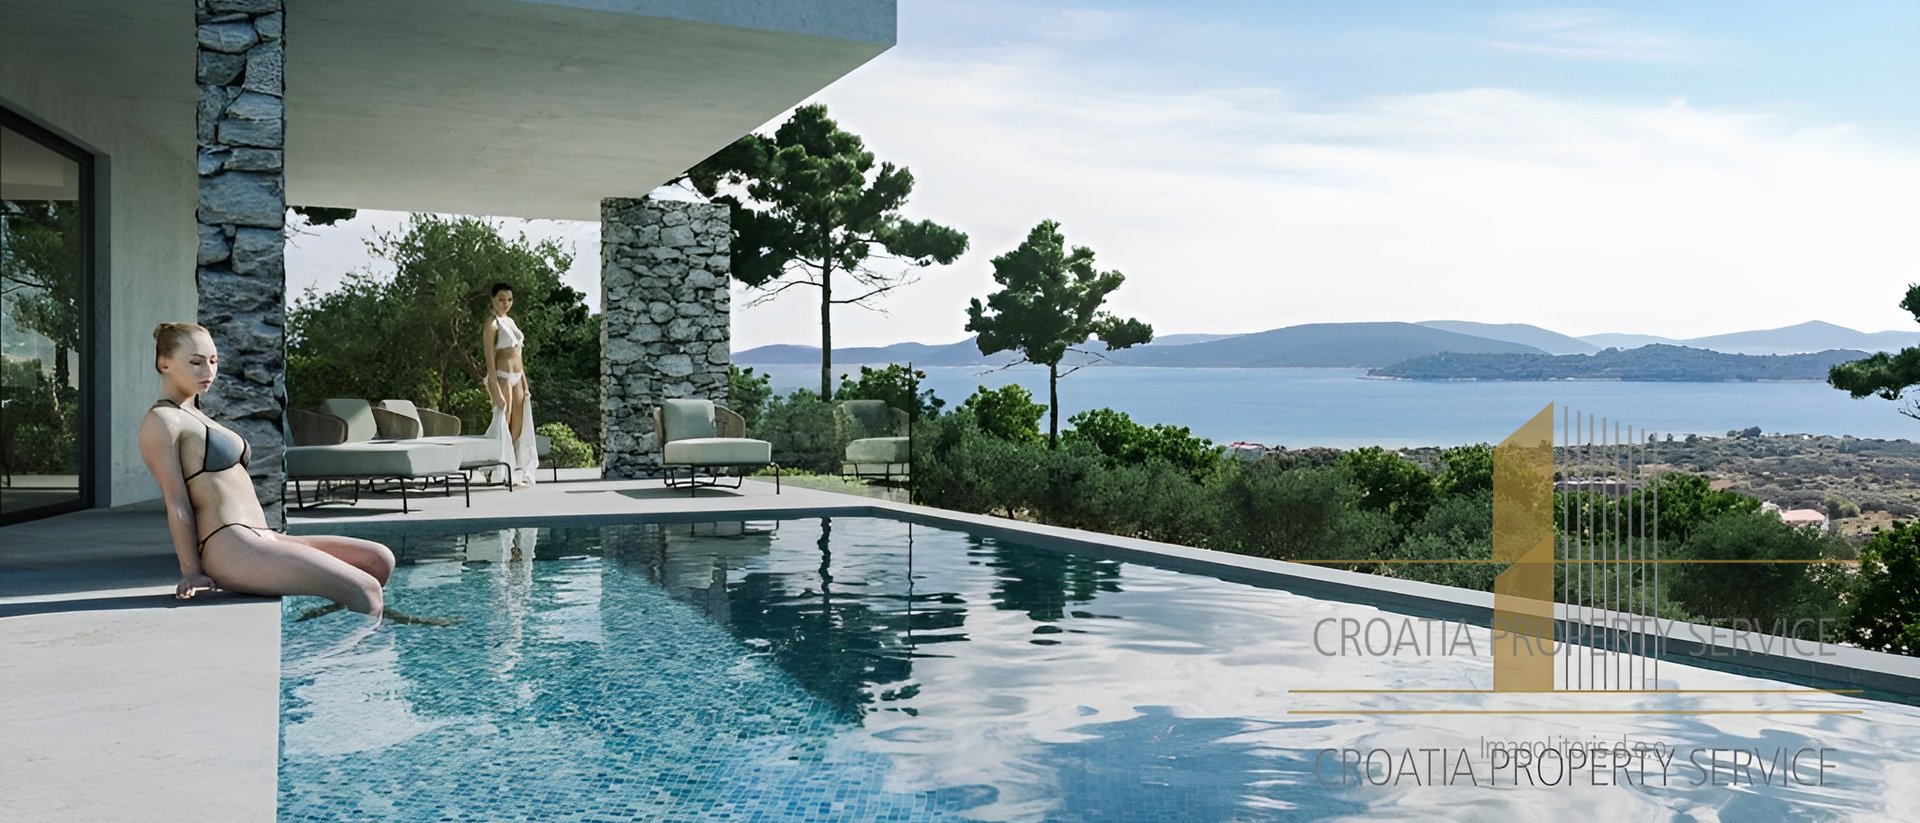 Moderna luksuzna vila s pogledom na more u Vodicama!